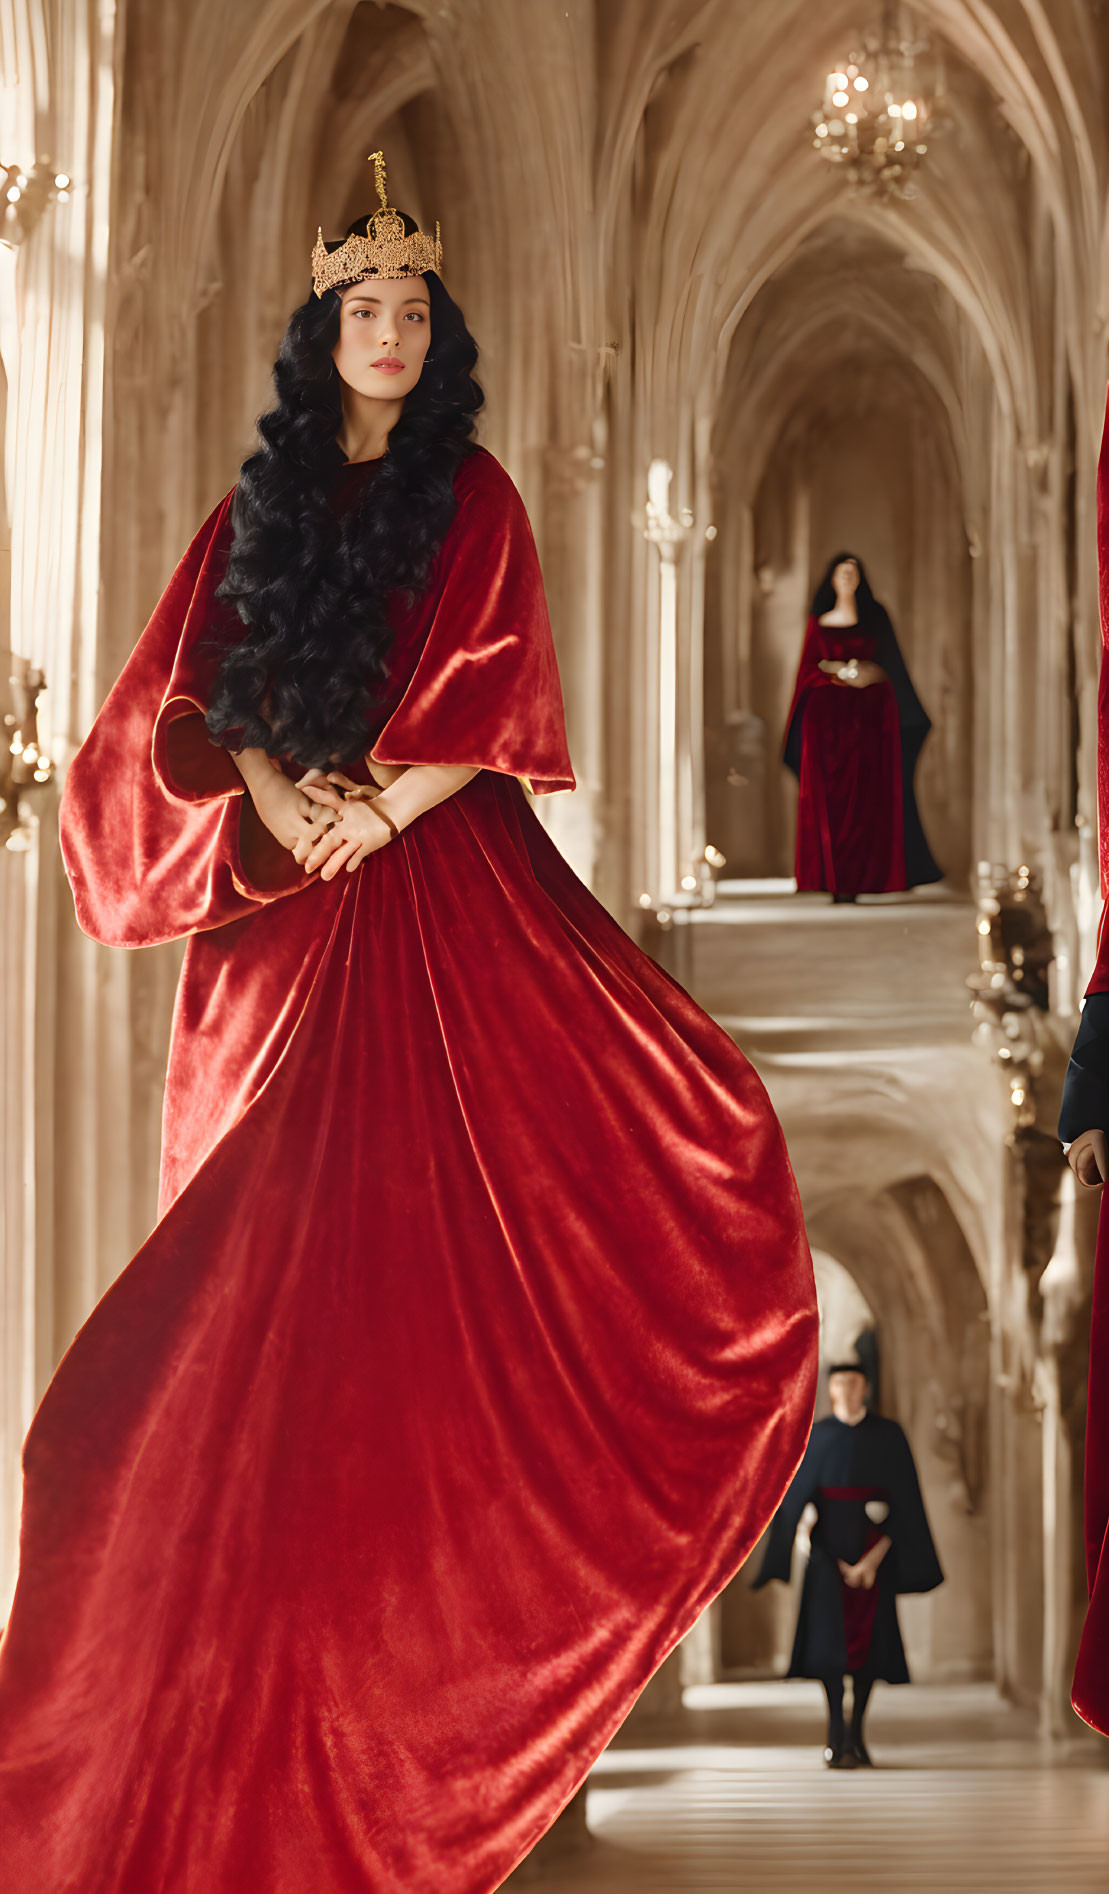 Regal woman in red velvet cloak and golden crown in ornate corridor